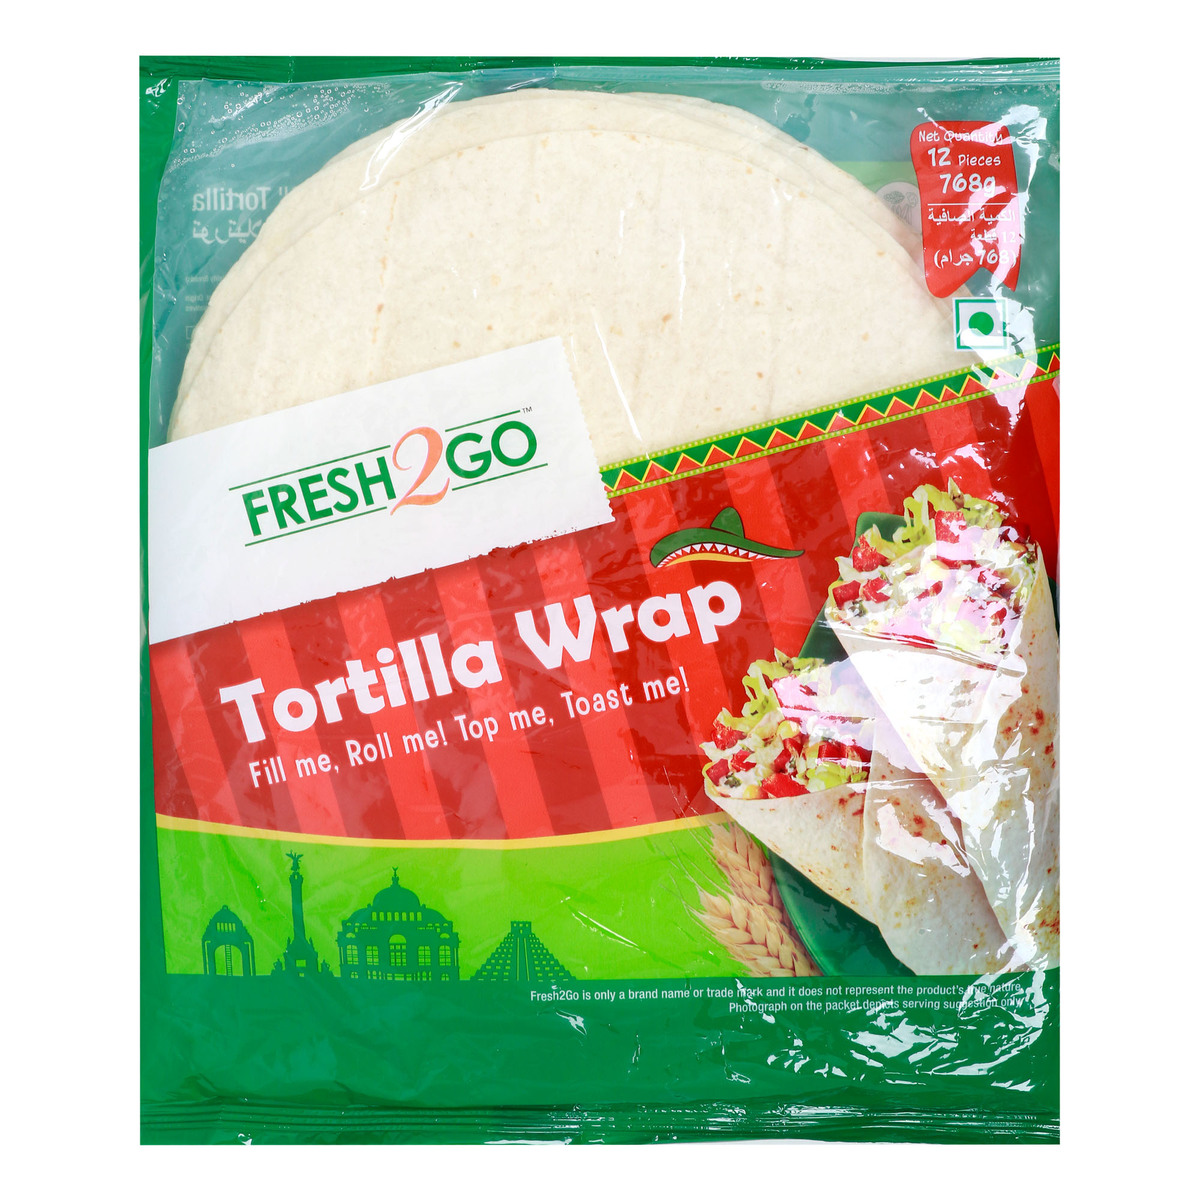 Fresh2Go 10" Tortilla Wrap 12 pcs 768 g